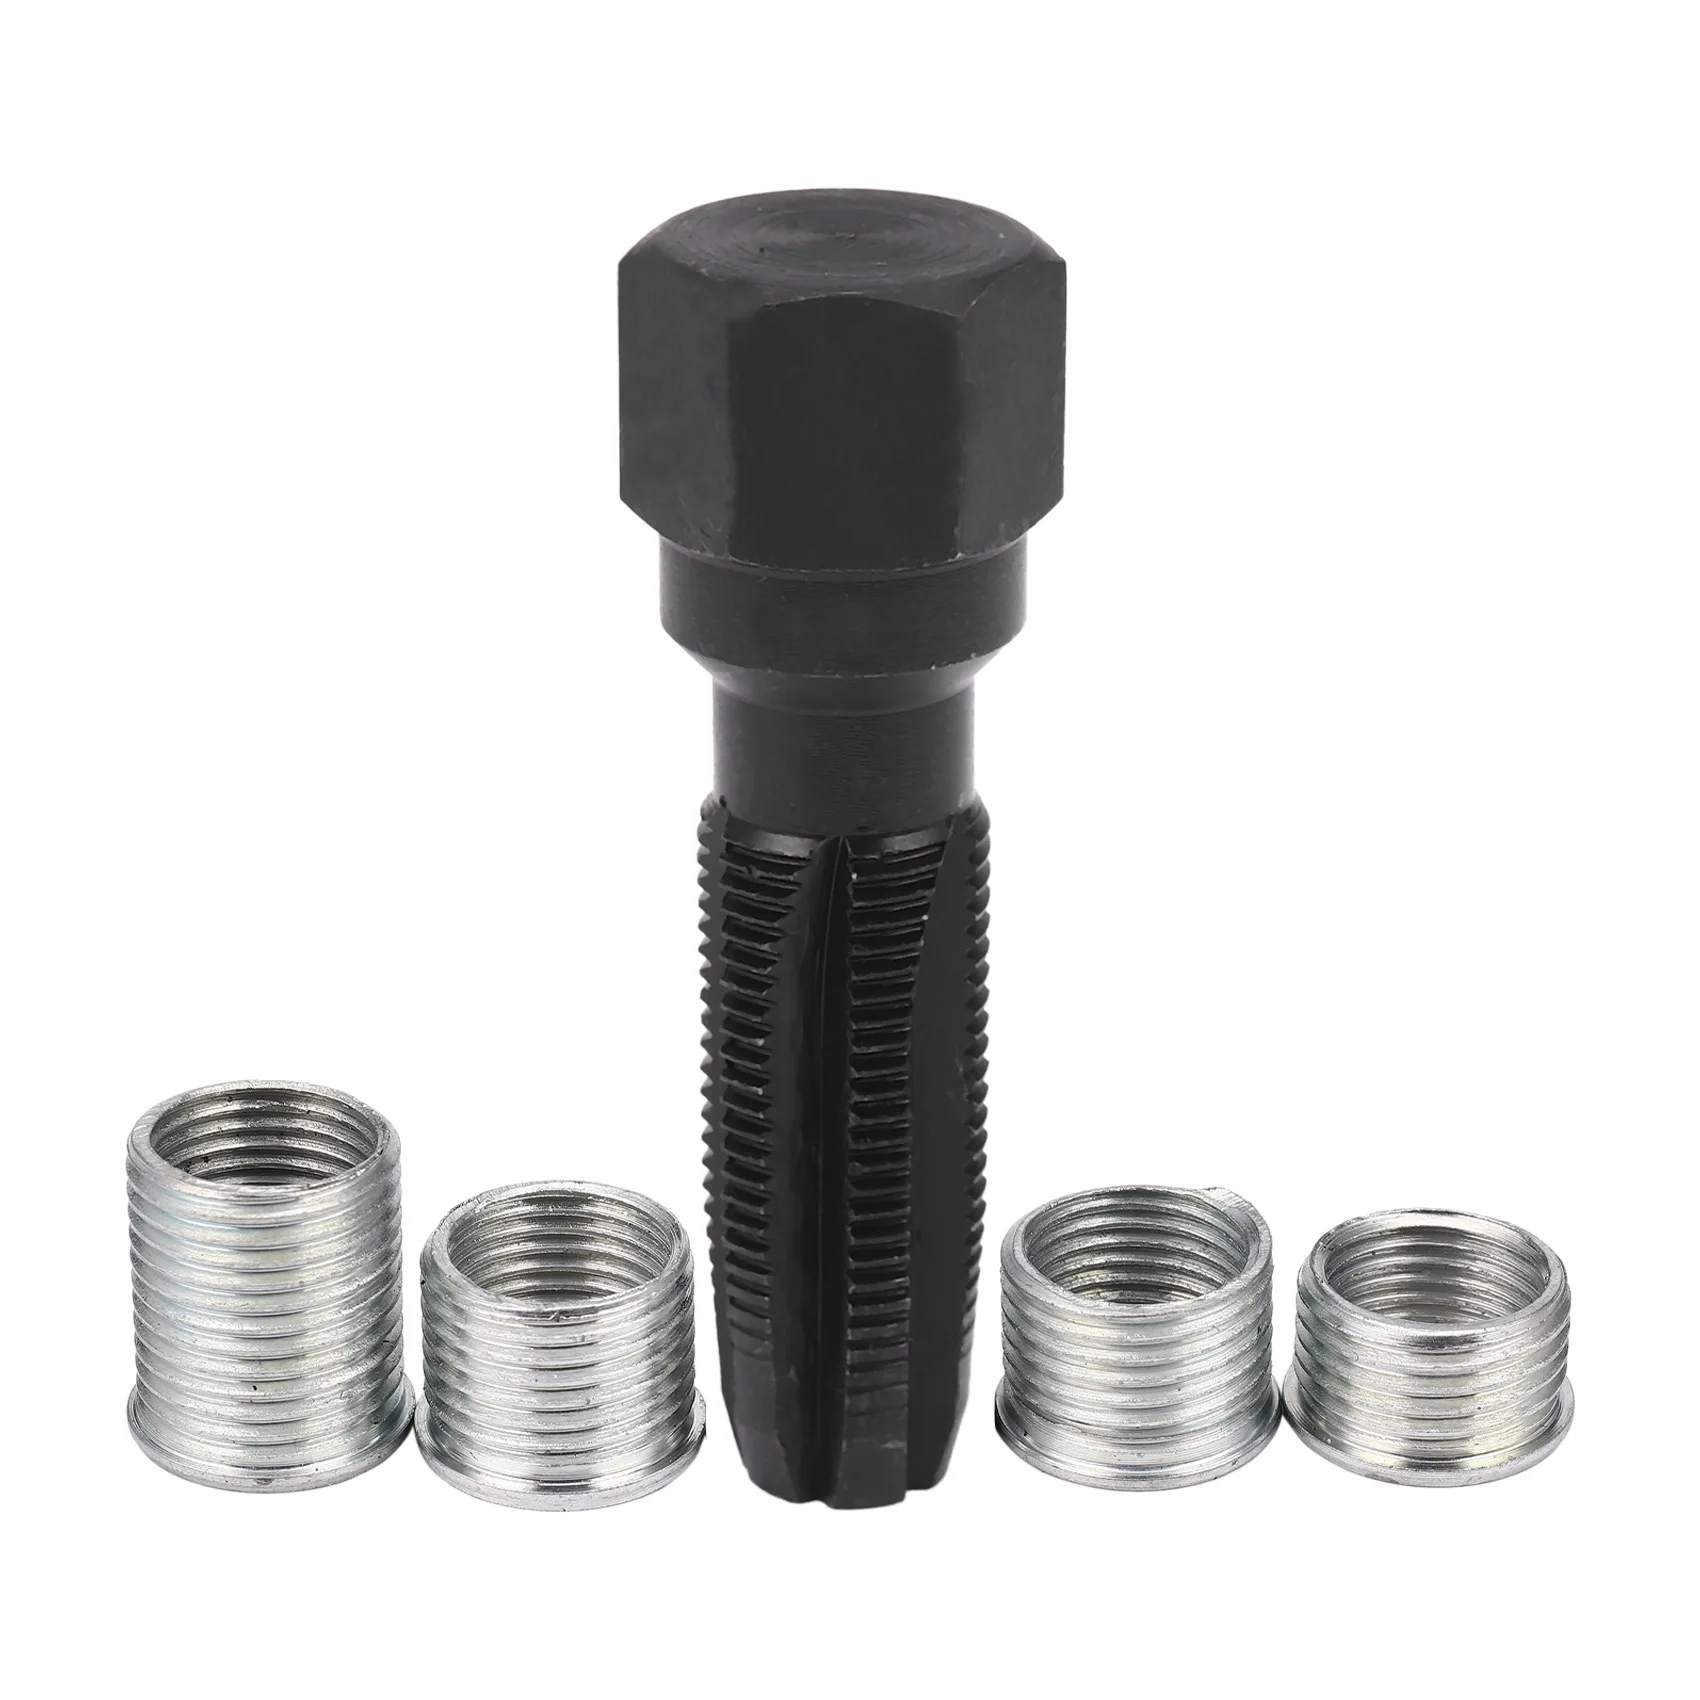 

14mm Spark Plug Thread Repair Kit Rethread Tool Kit Reamer Tap M14x1.25